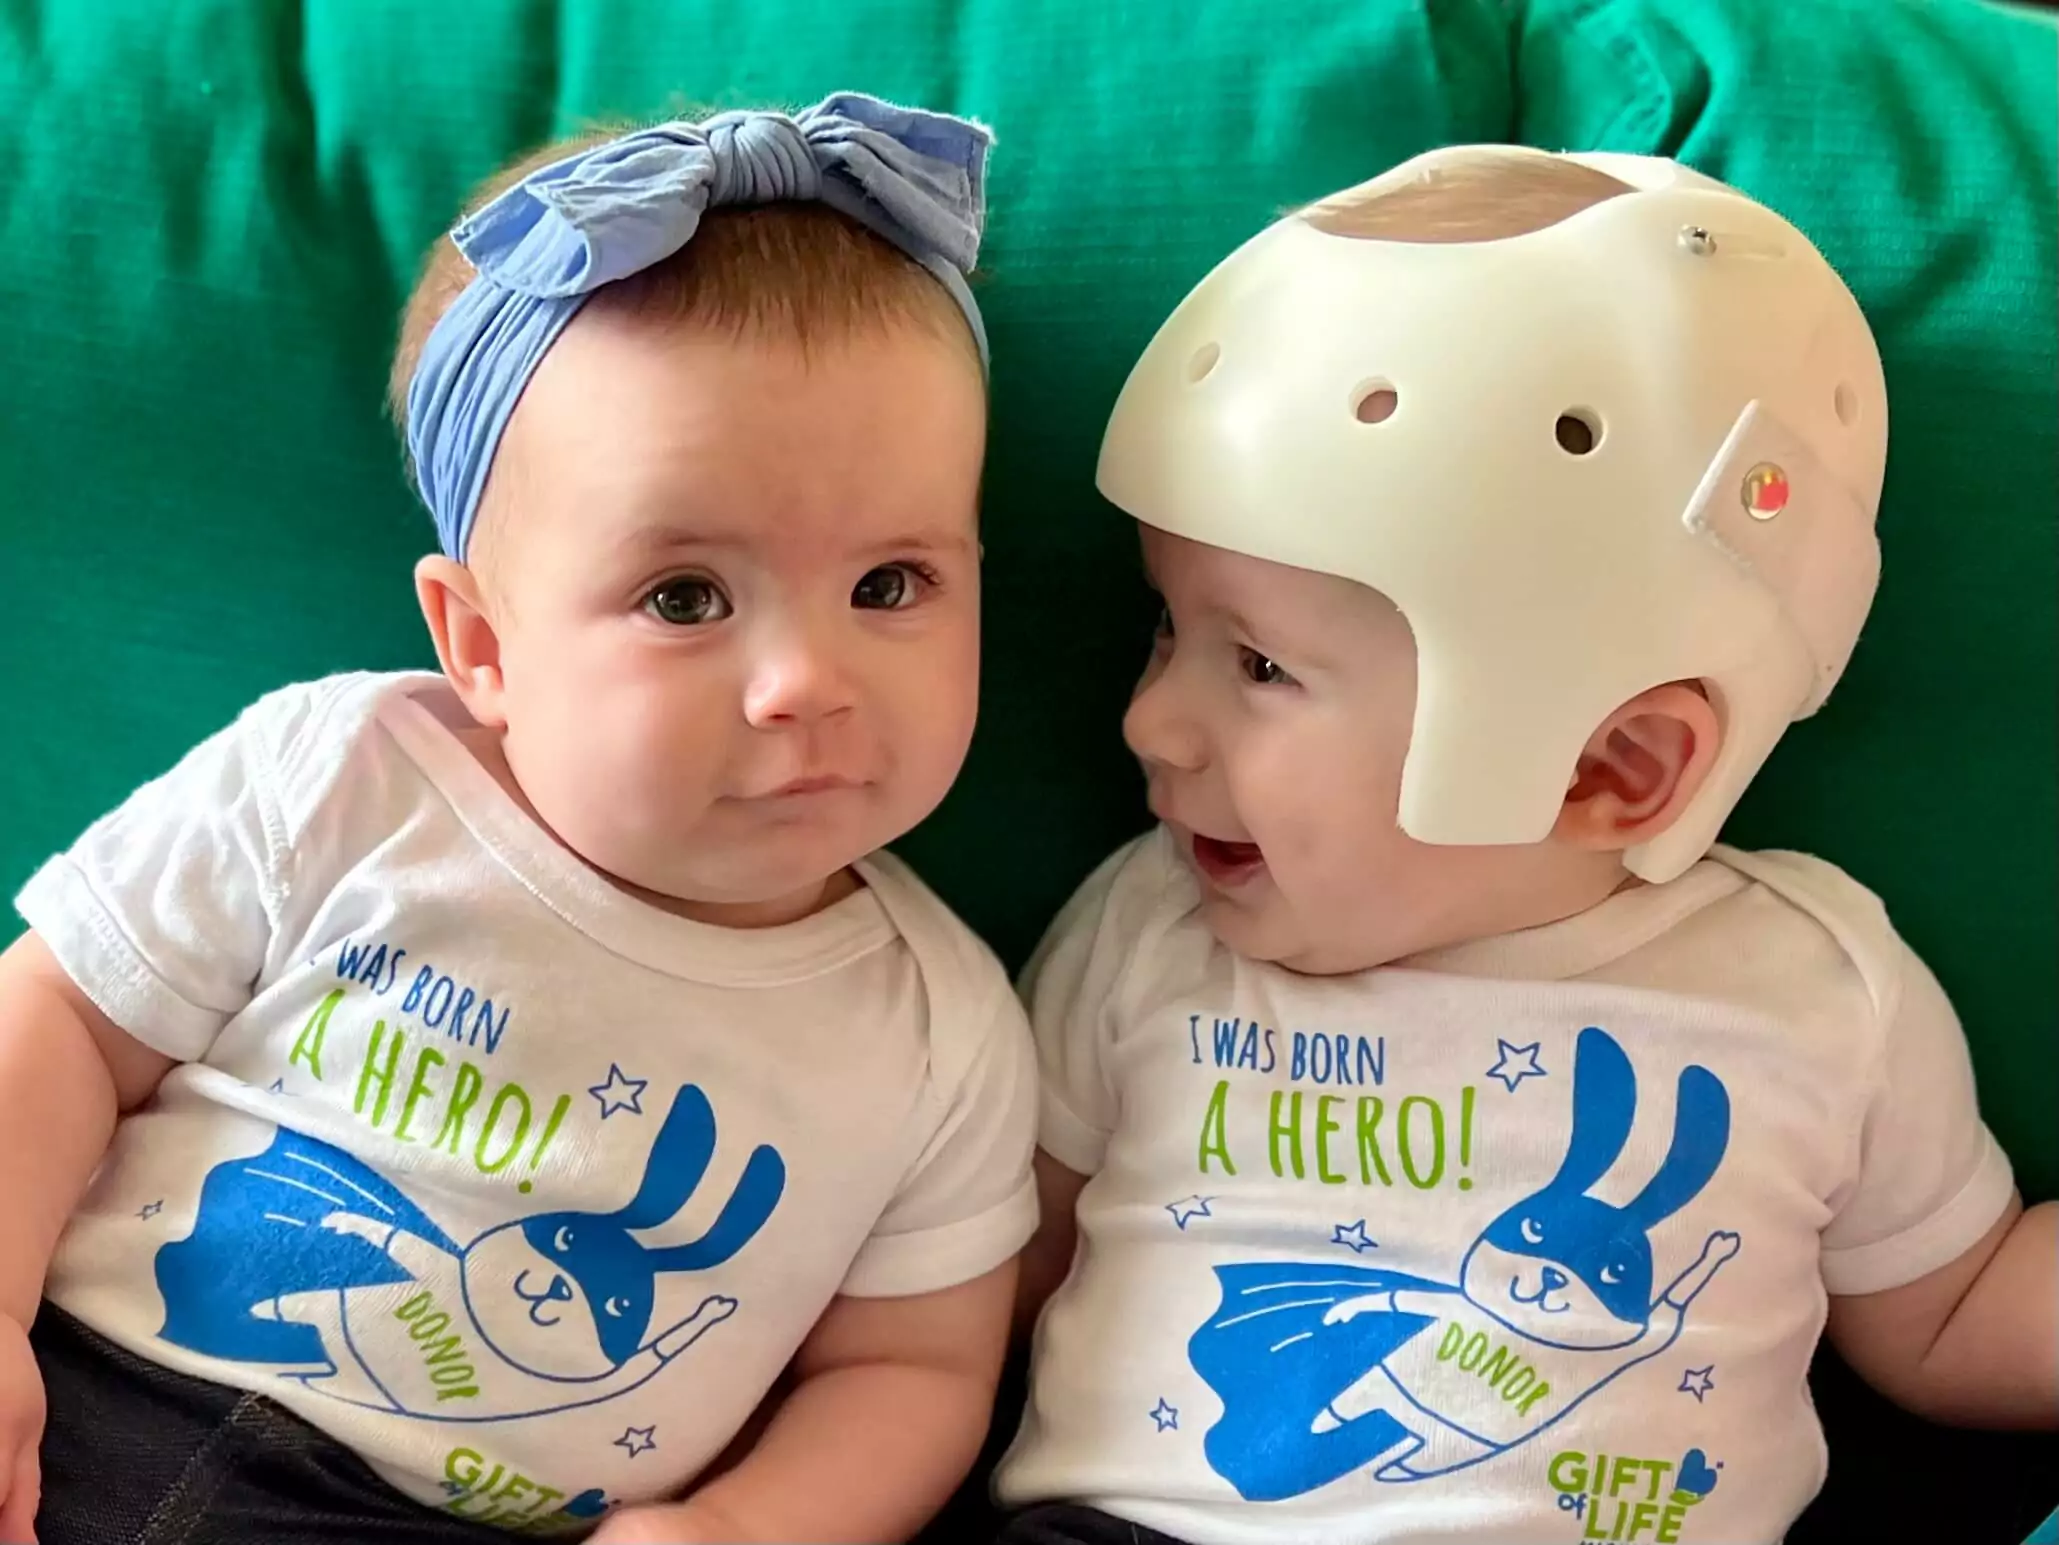 Twin babies wearing shirts with a cute superhero rabbit graphic saying "I was born a hero"